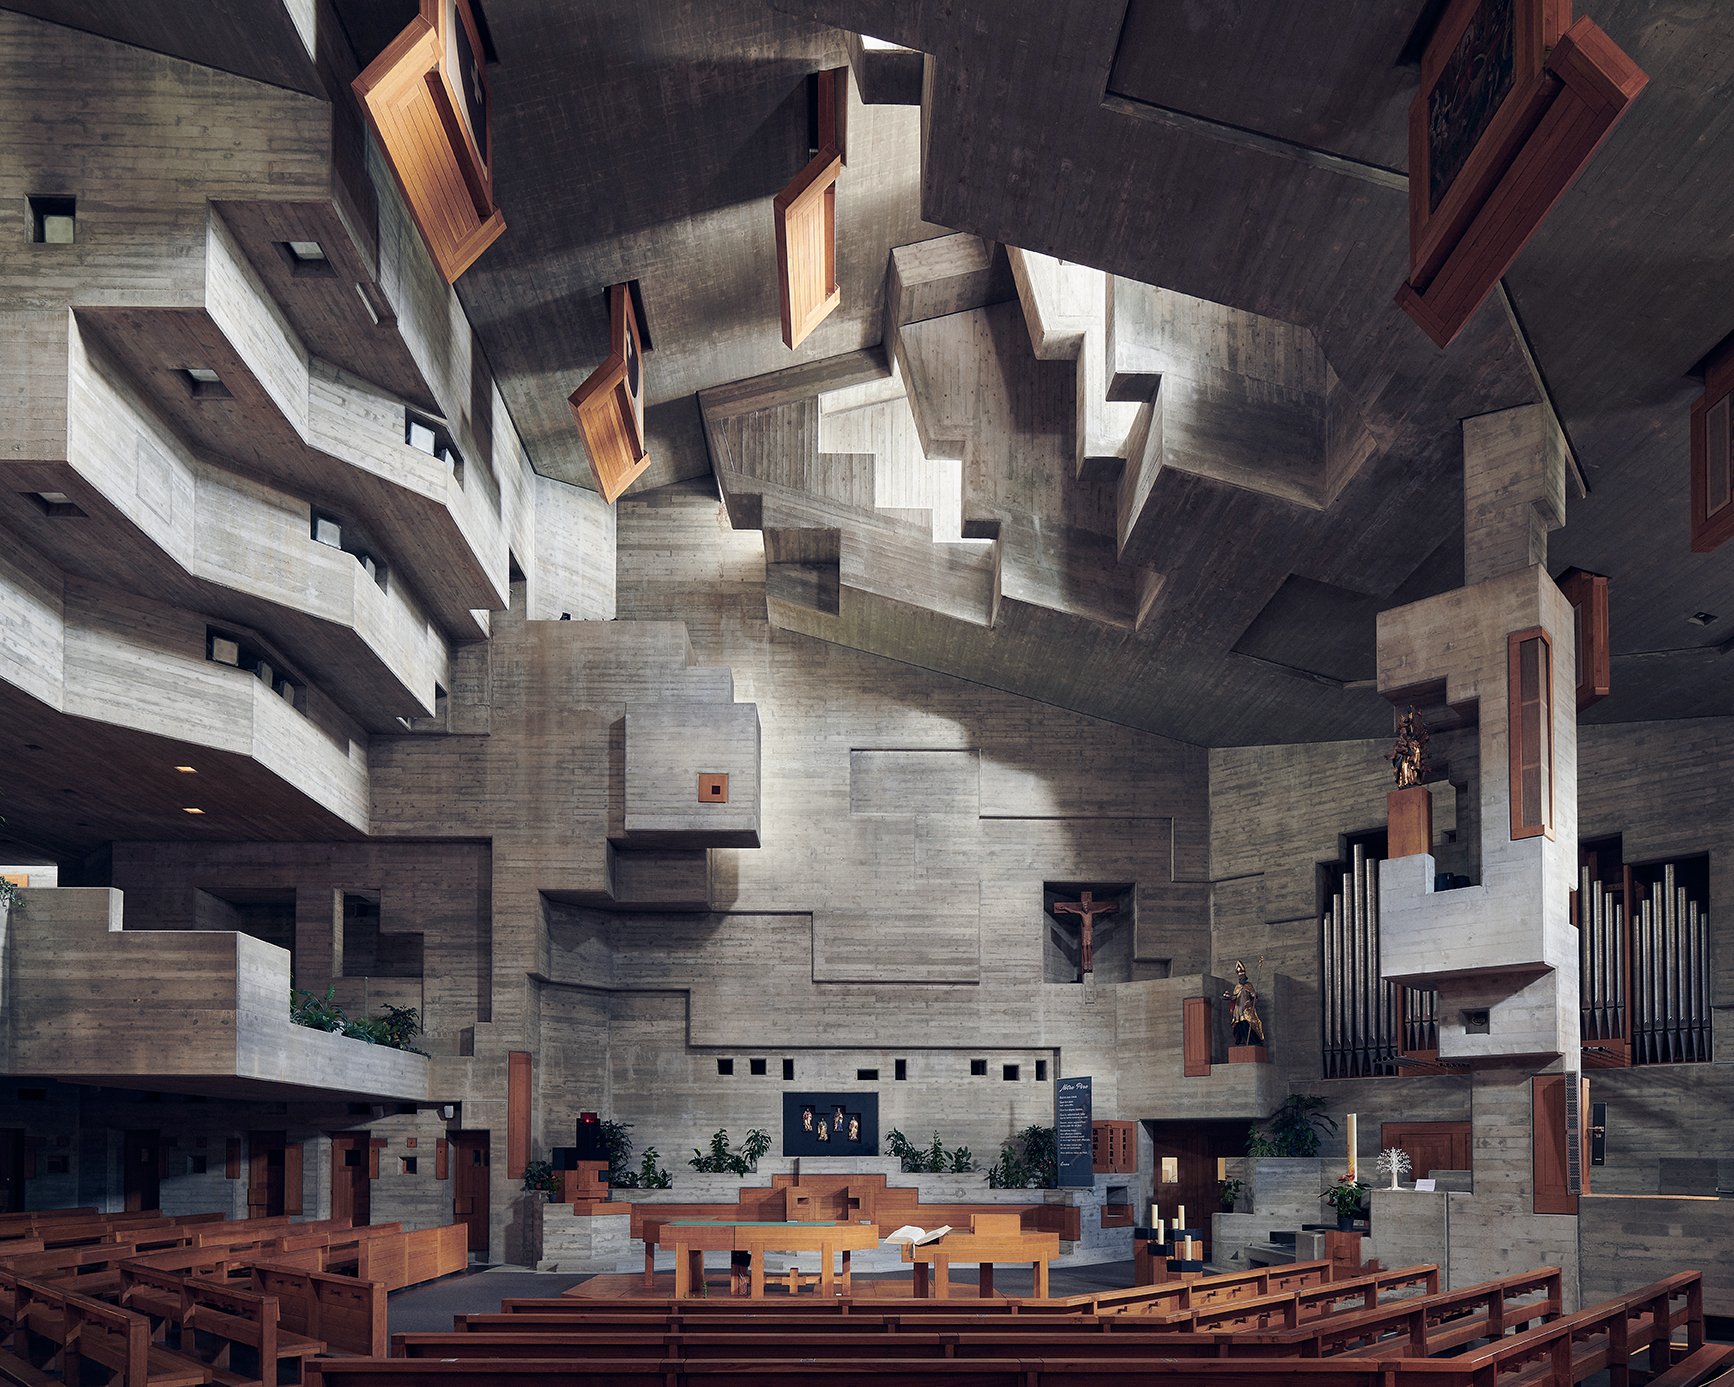 L’église Saint-Nicolas - Heremence, Switzerland  - Walter Maria Förderer, 1968-1971